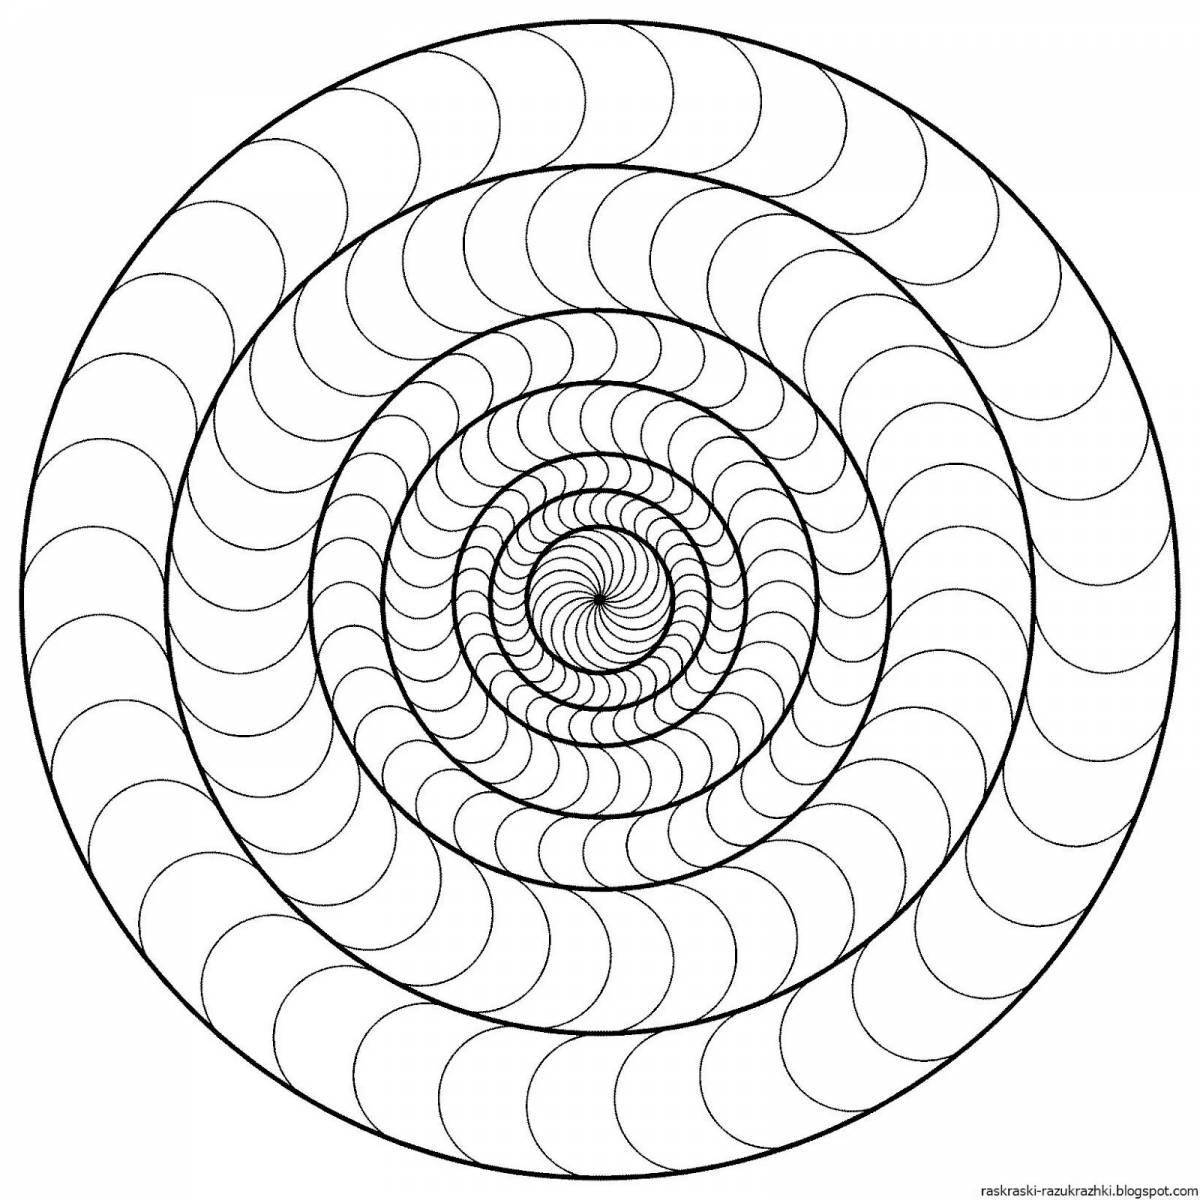 Sparkling circular spiral create a coloring page